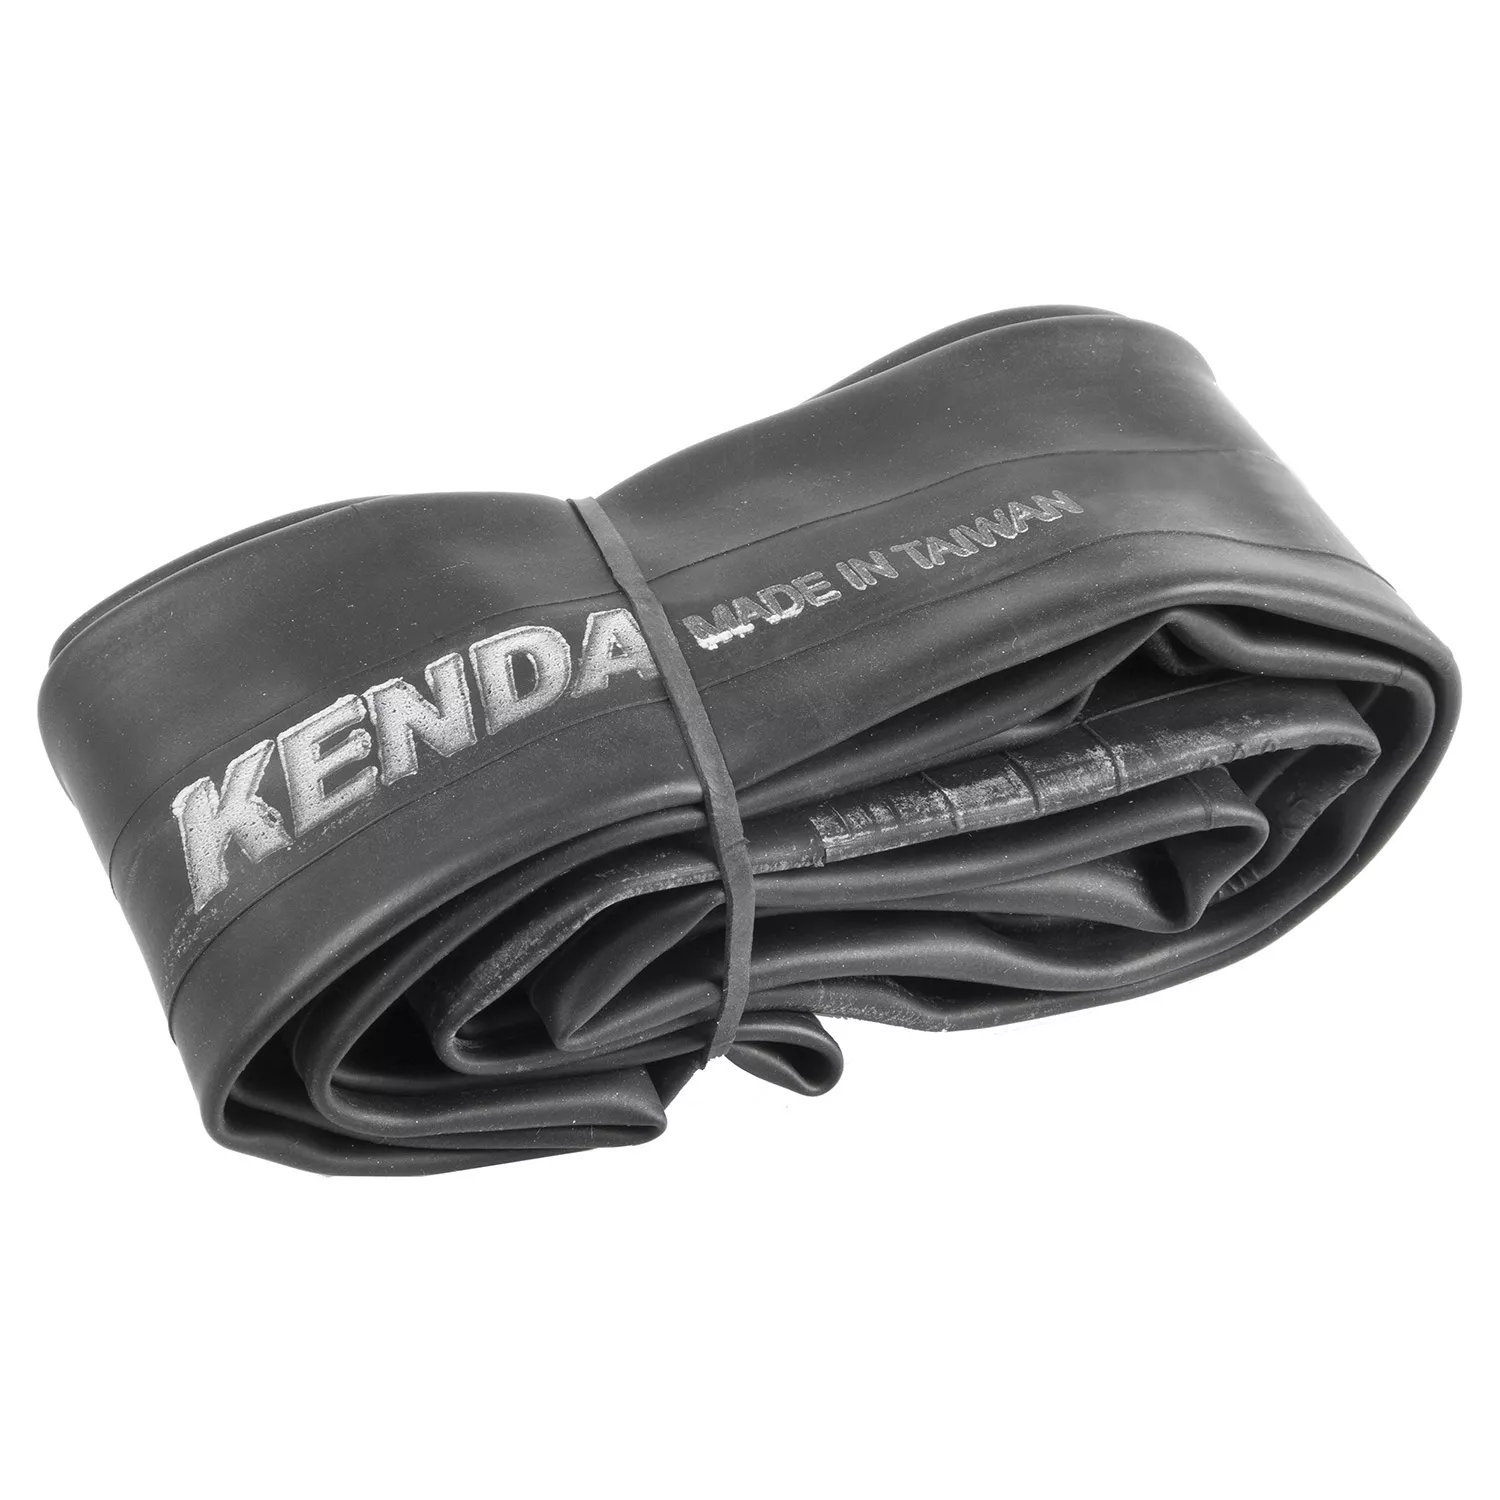 KENDA Ultralite bicycle inner tube 26 inch x 1.9 -2.125 inch AV